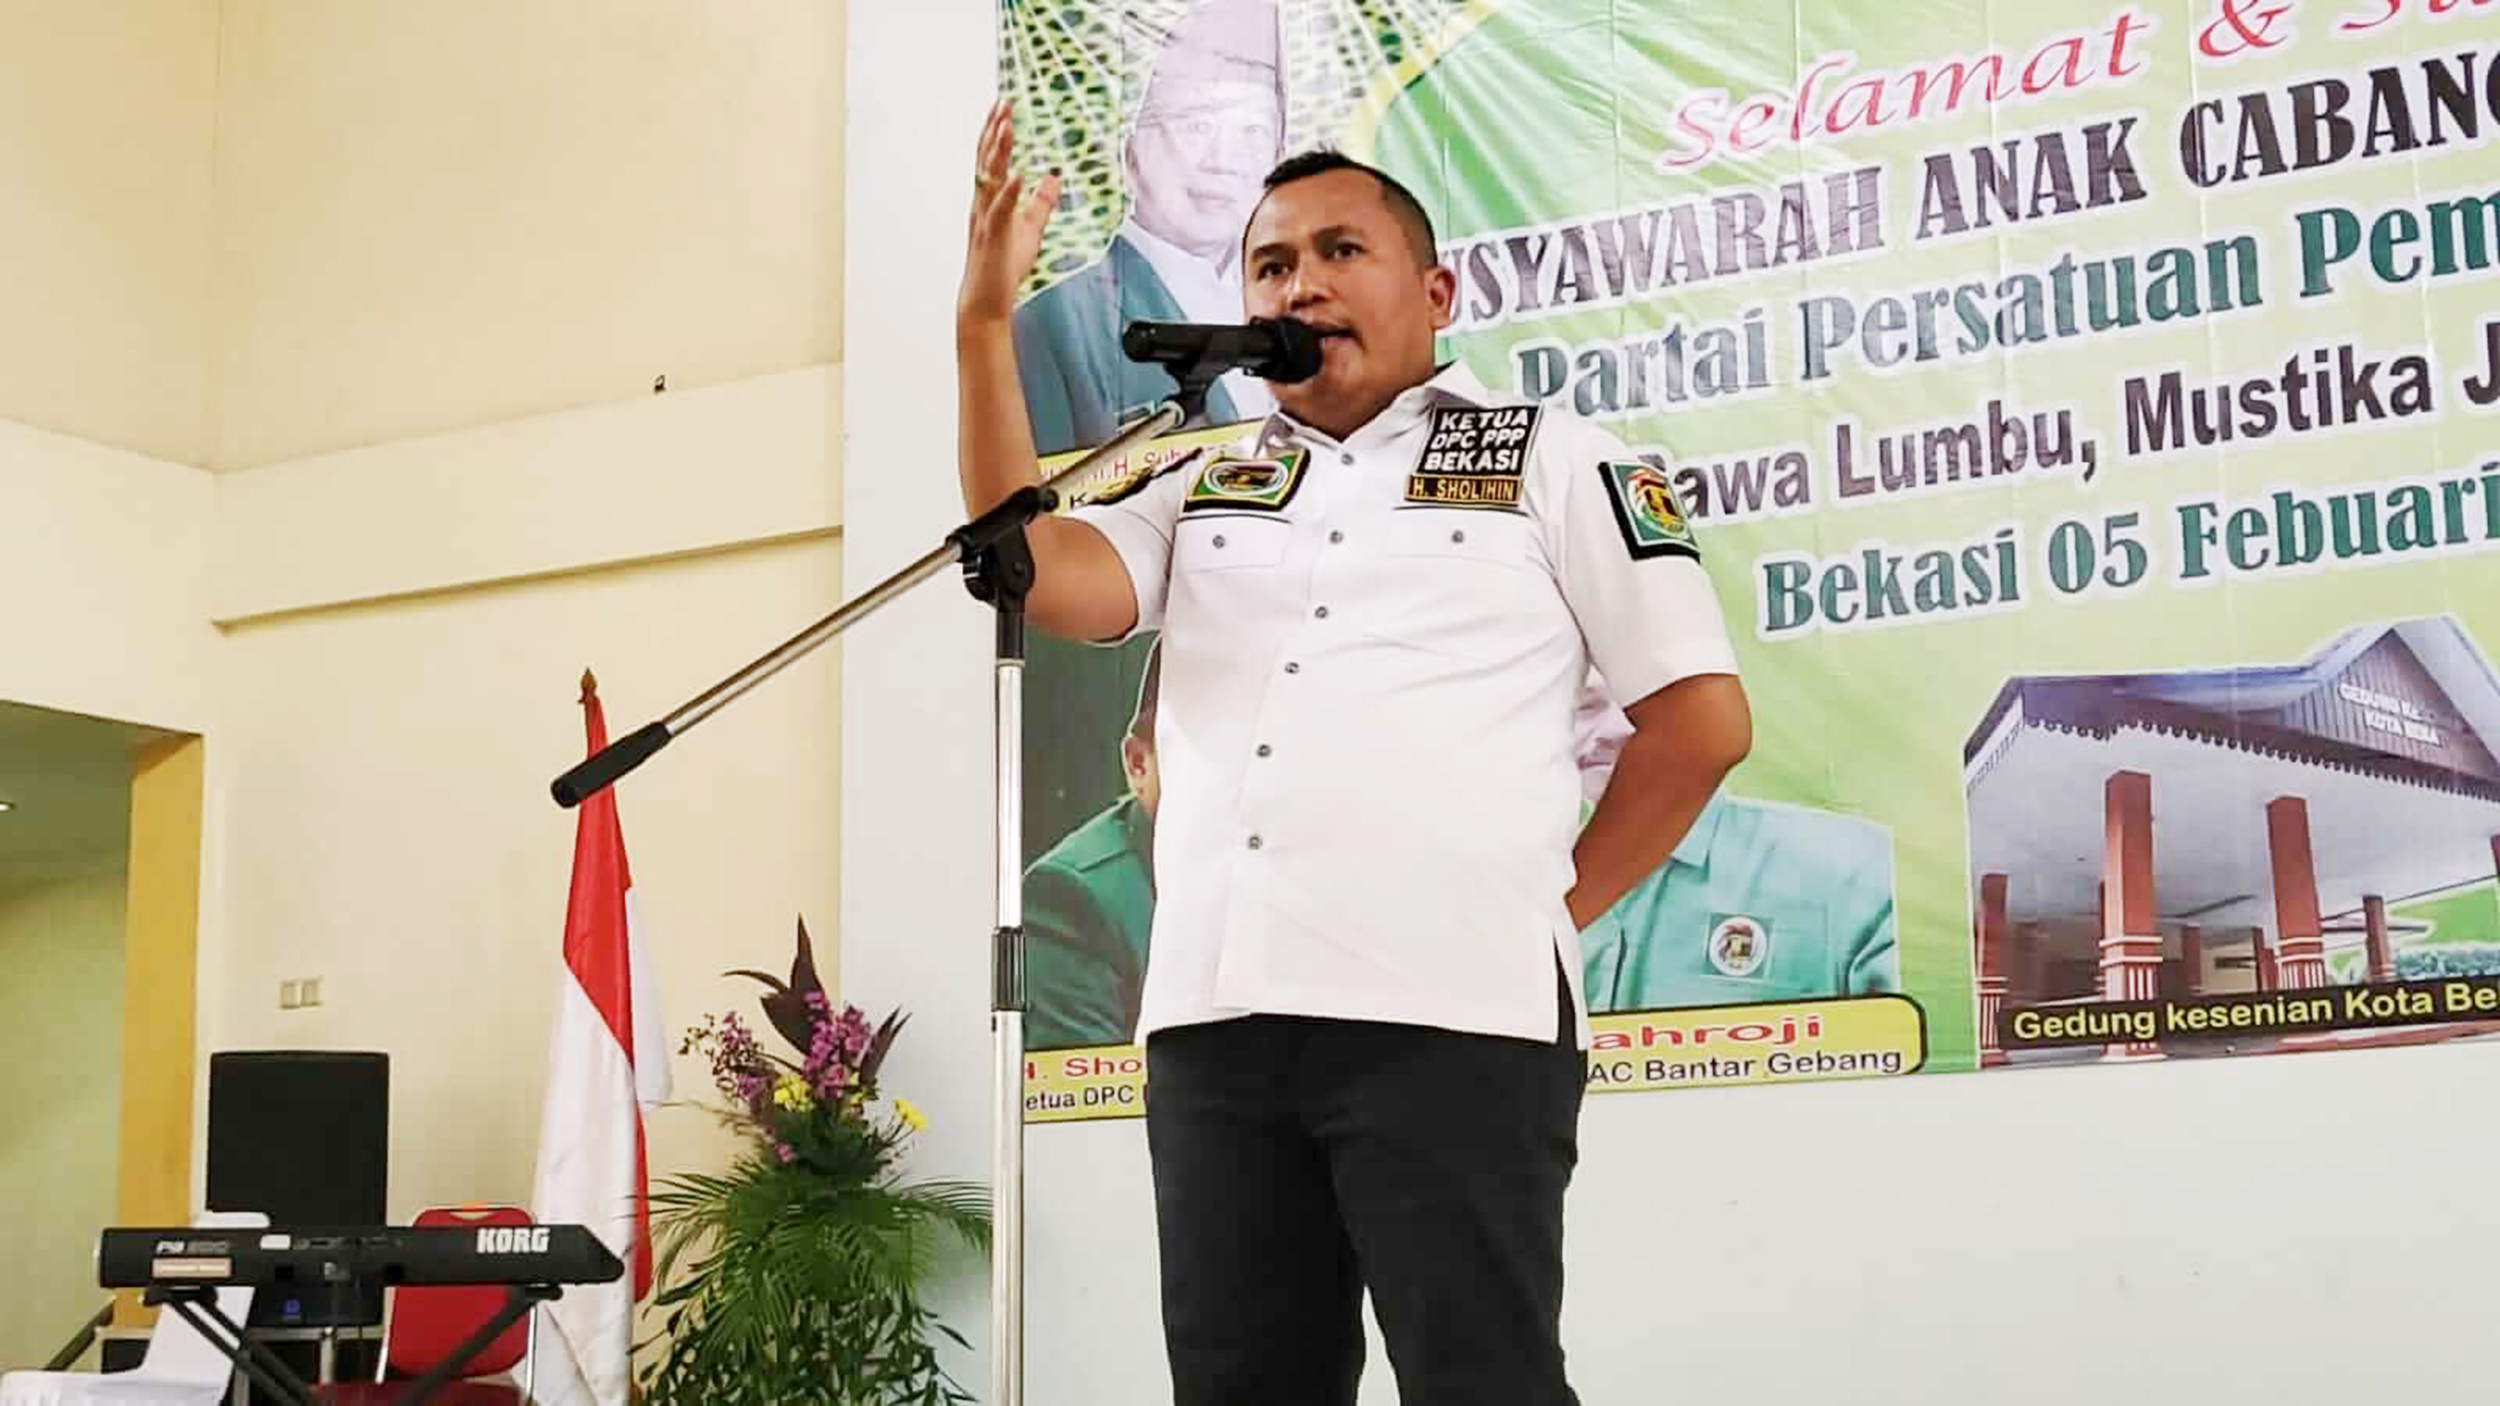 Anggota DPRD Kota Bekasi Ini Desak Pemkot Rampungkan Folder Rawalumbu